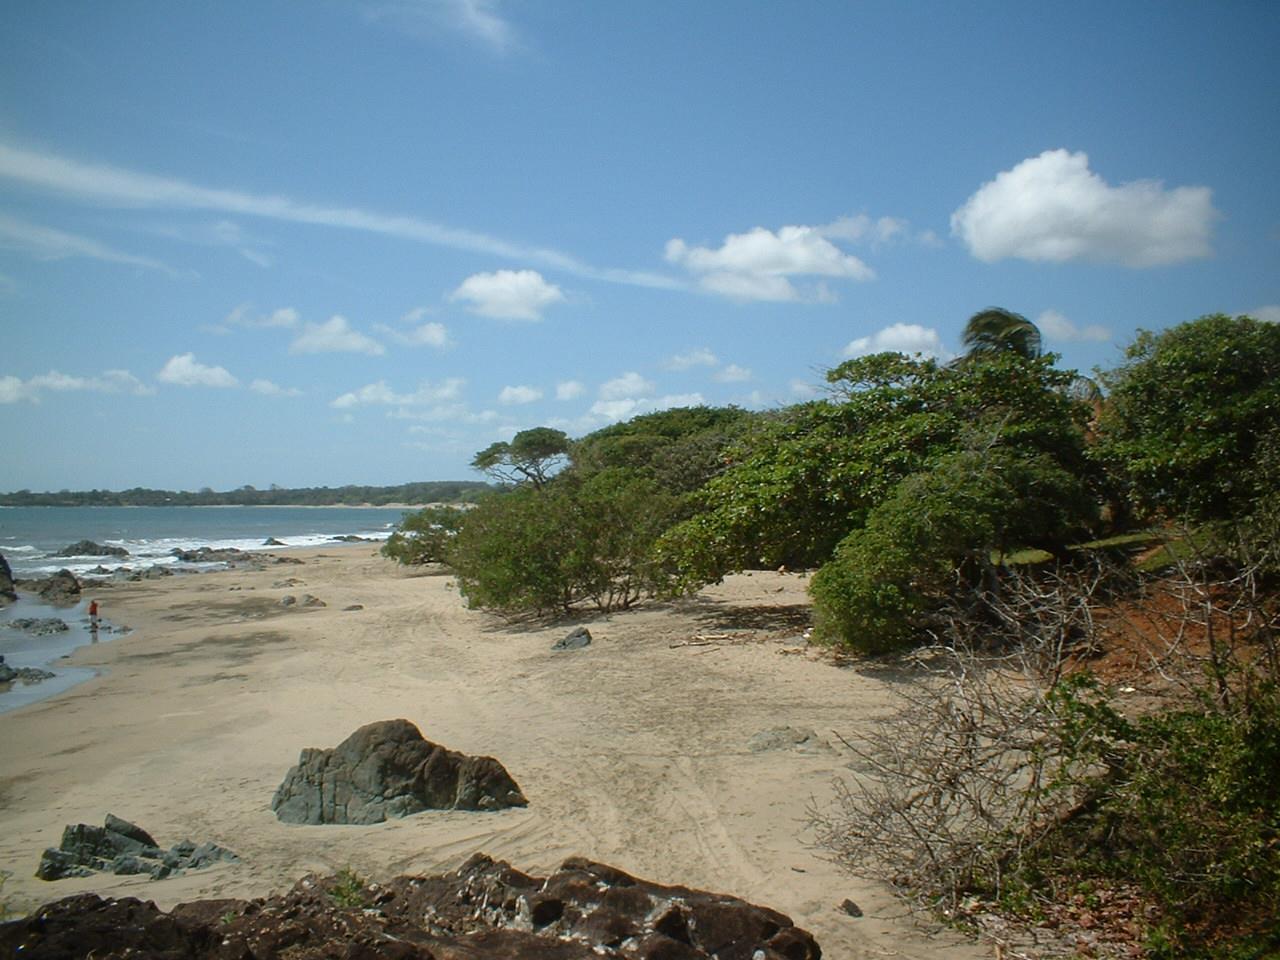 Fotografija Lagart Point Beach nahaja se v naravnem okolju